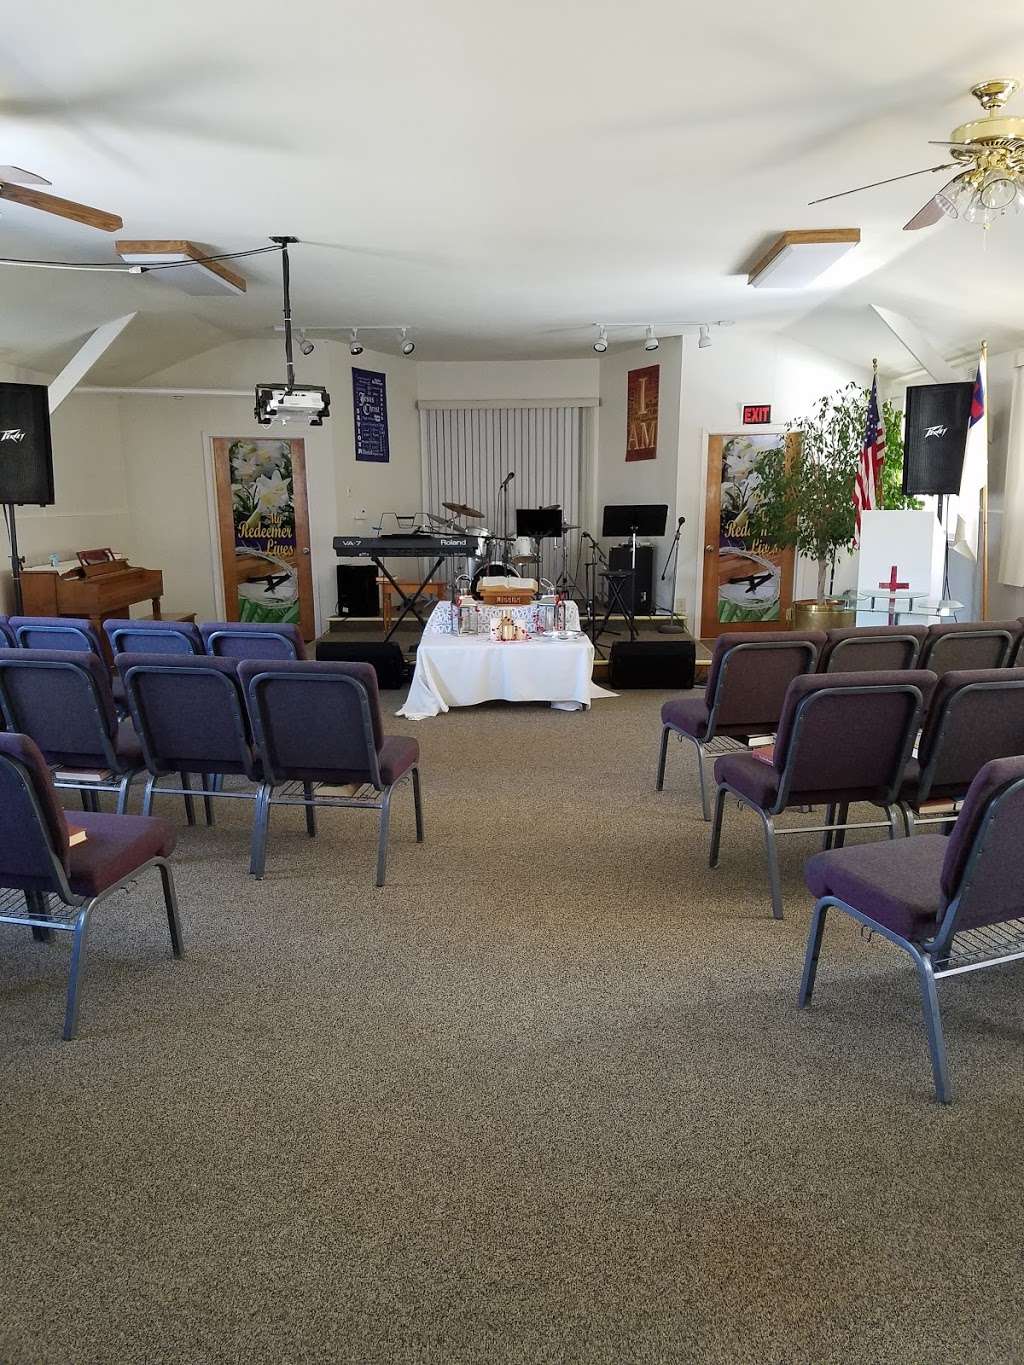 New Hope Fellowship Erie Baptist Church | 580 Cheesman St, Erie, CO 80516, USA | Phone: (303) 828-0638